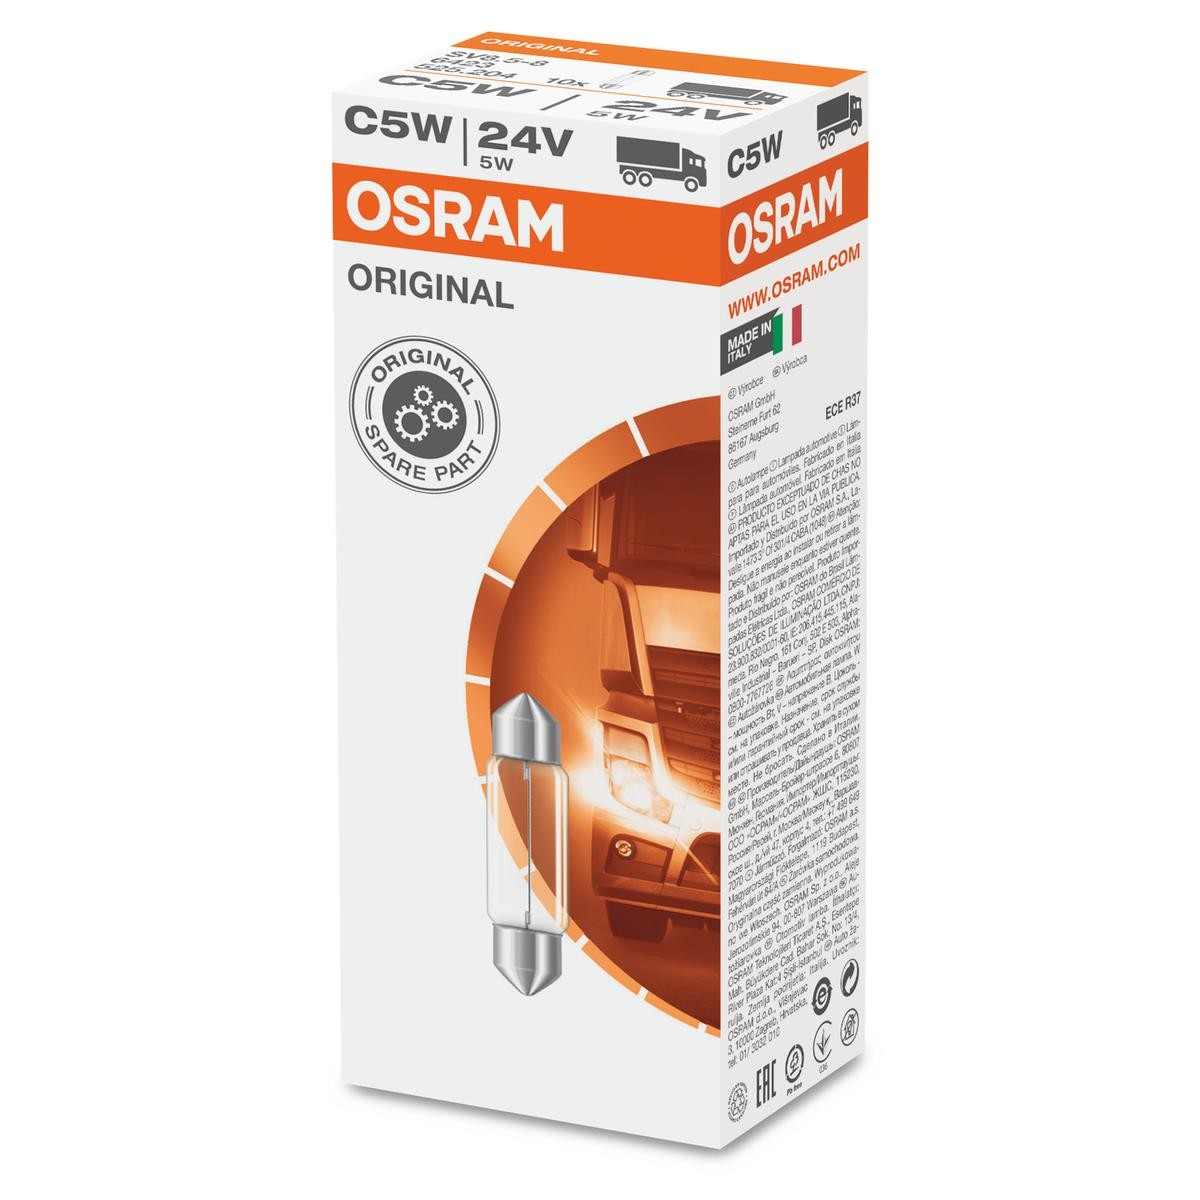 6423 OSRAM Number plate lamp DAIHATSU 24V 5W, C5W, SV8.5-8